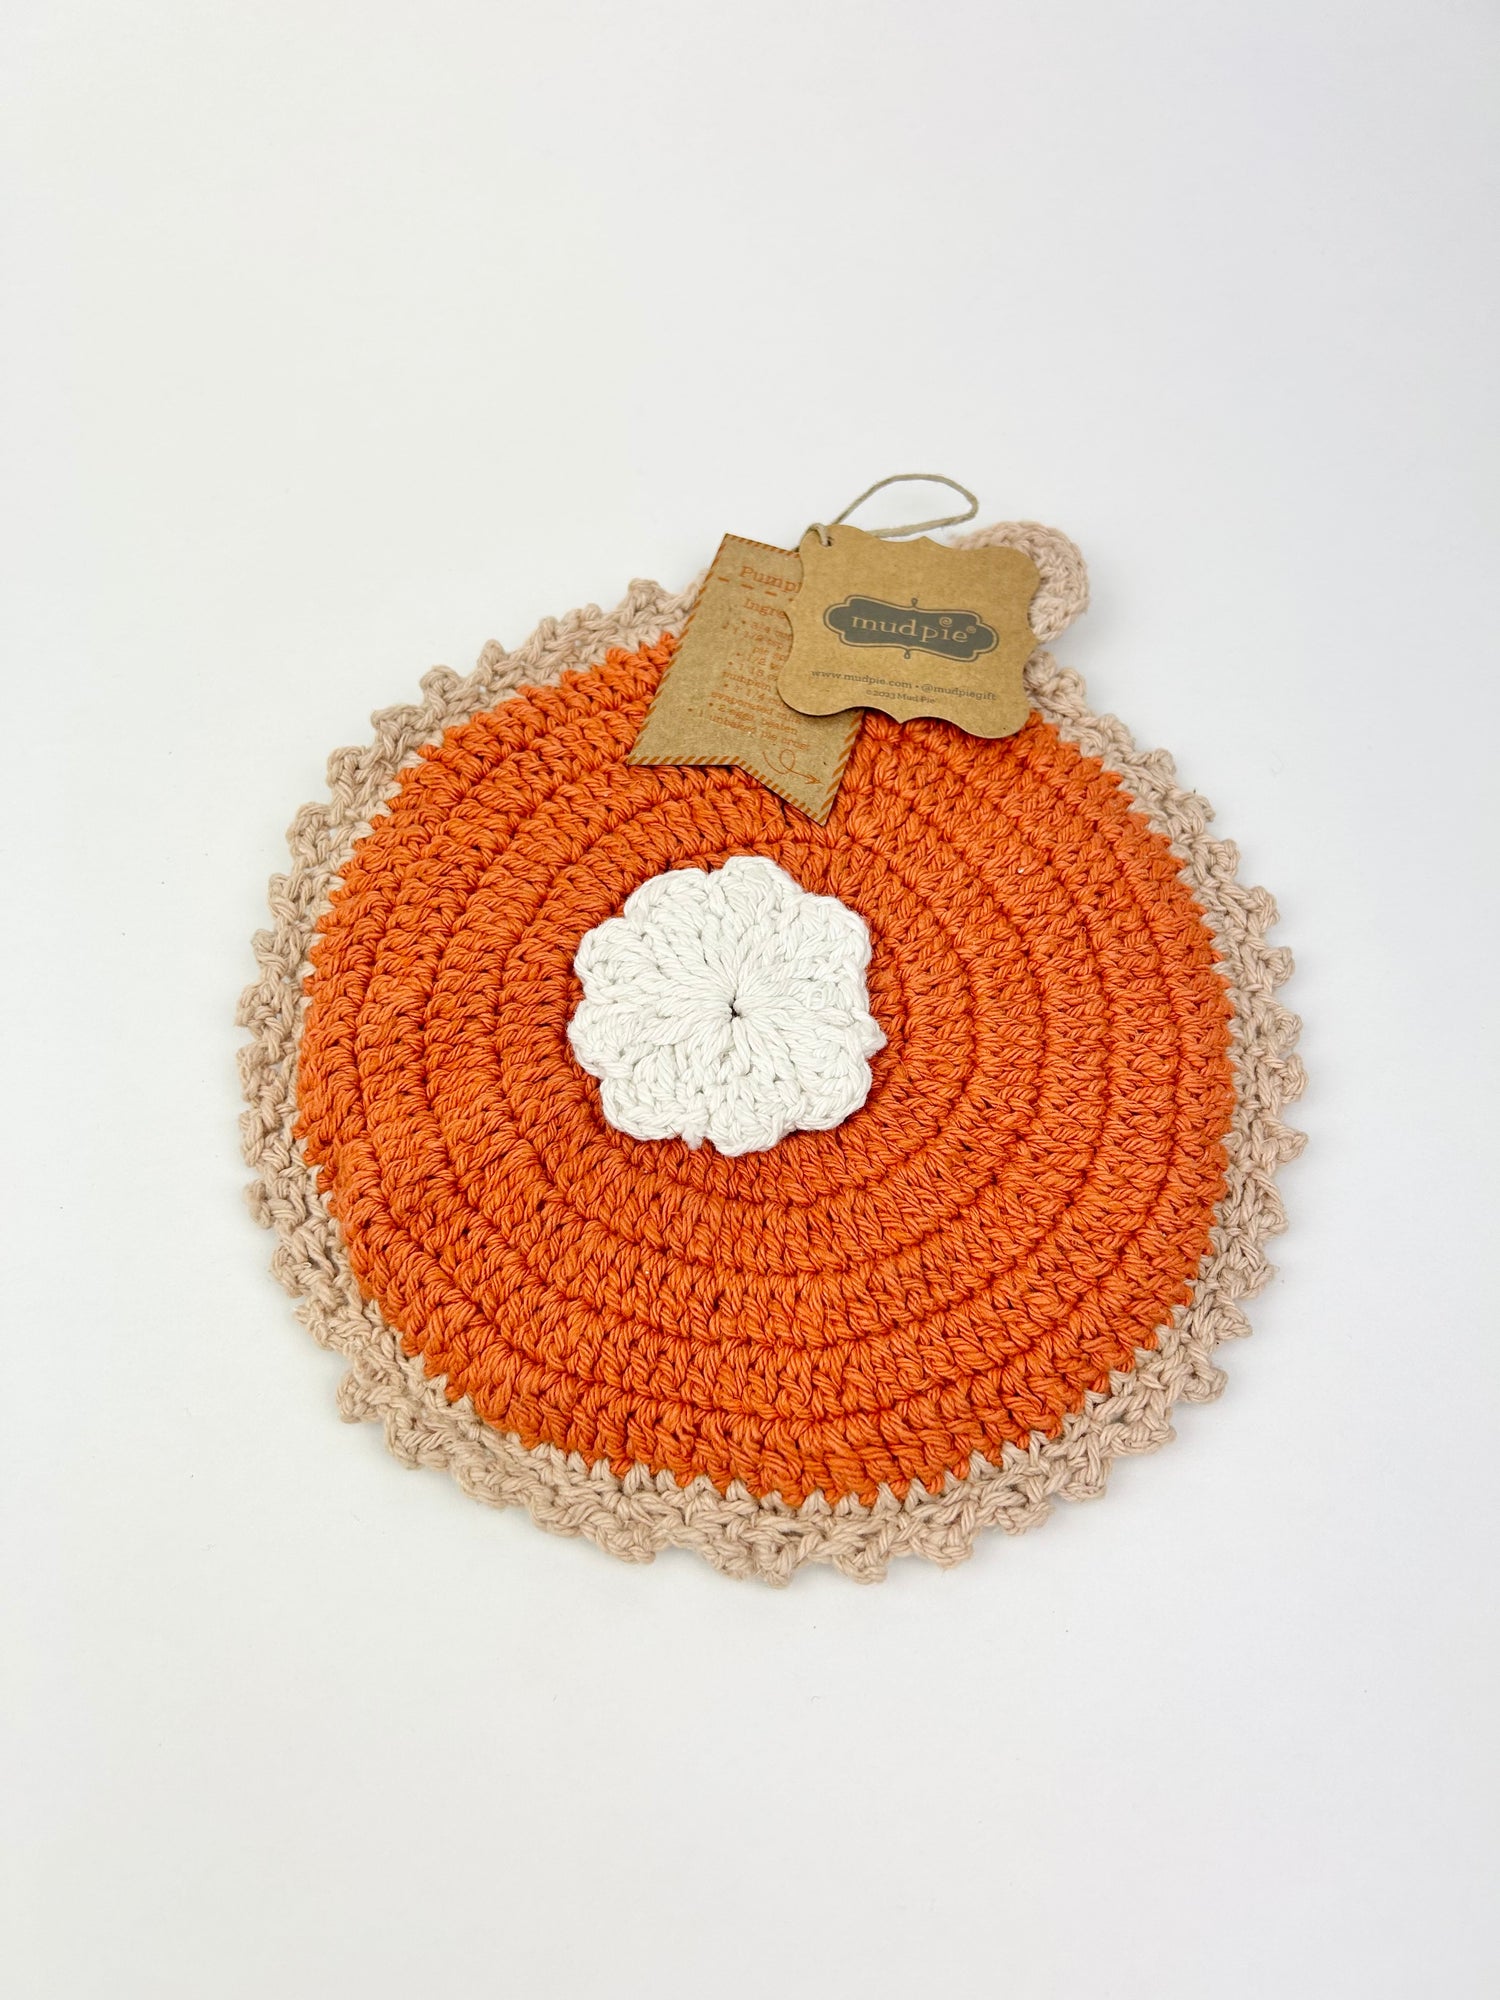 Crochet Pumpkin Pie Recipe Pot Holder Home Decor in  at Wrapsody